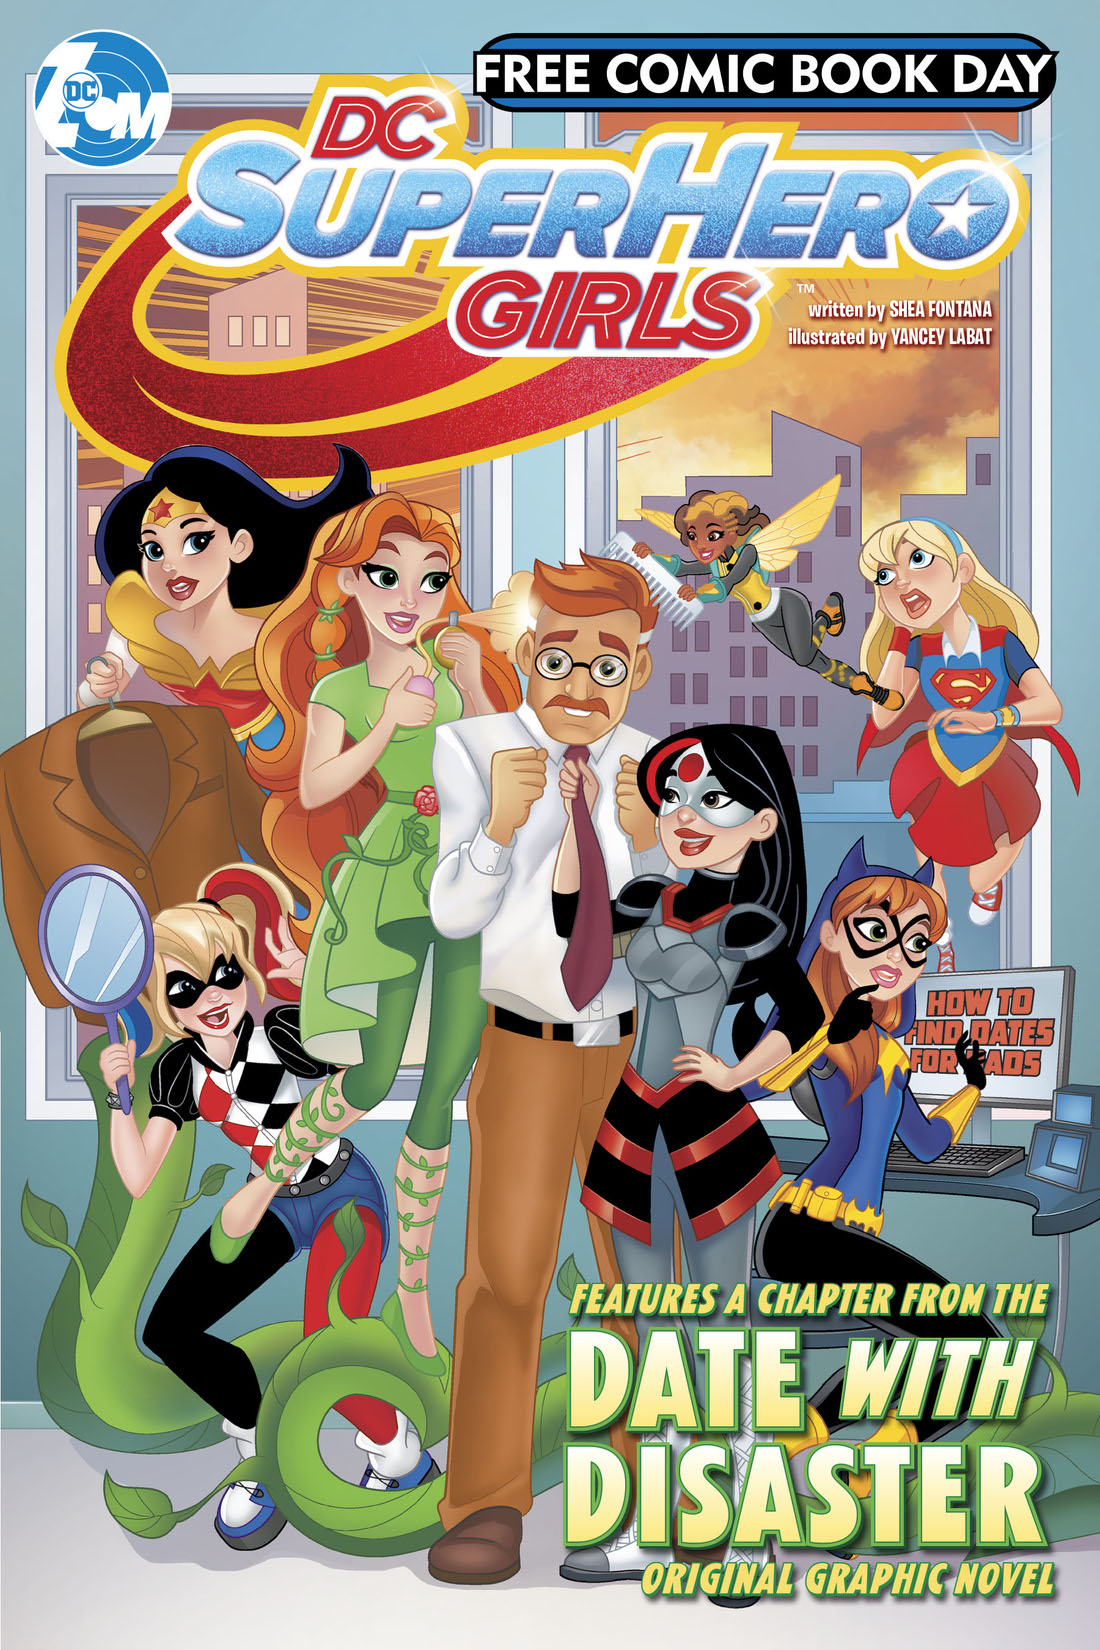 DC FCBD Silver DC Super Hero Girls 2018 #1 preview images